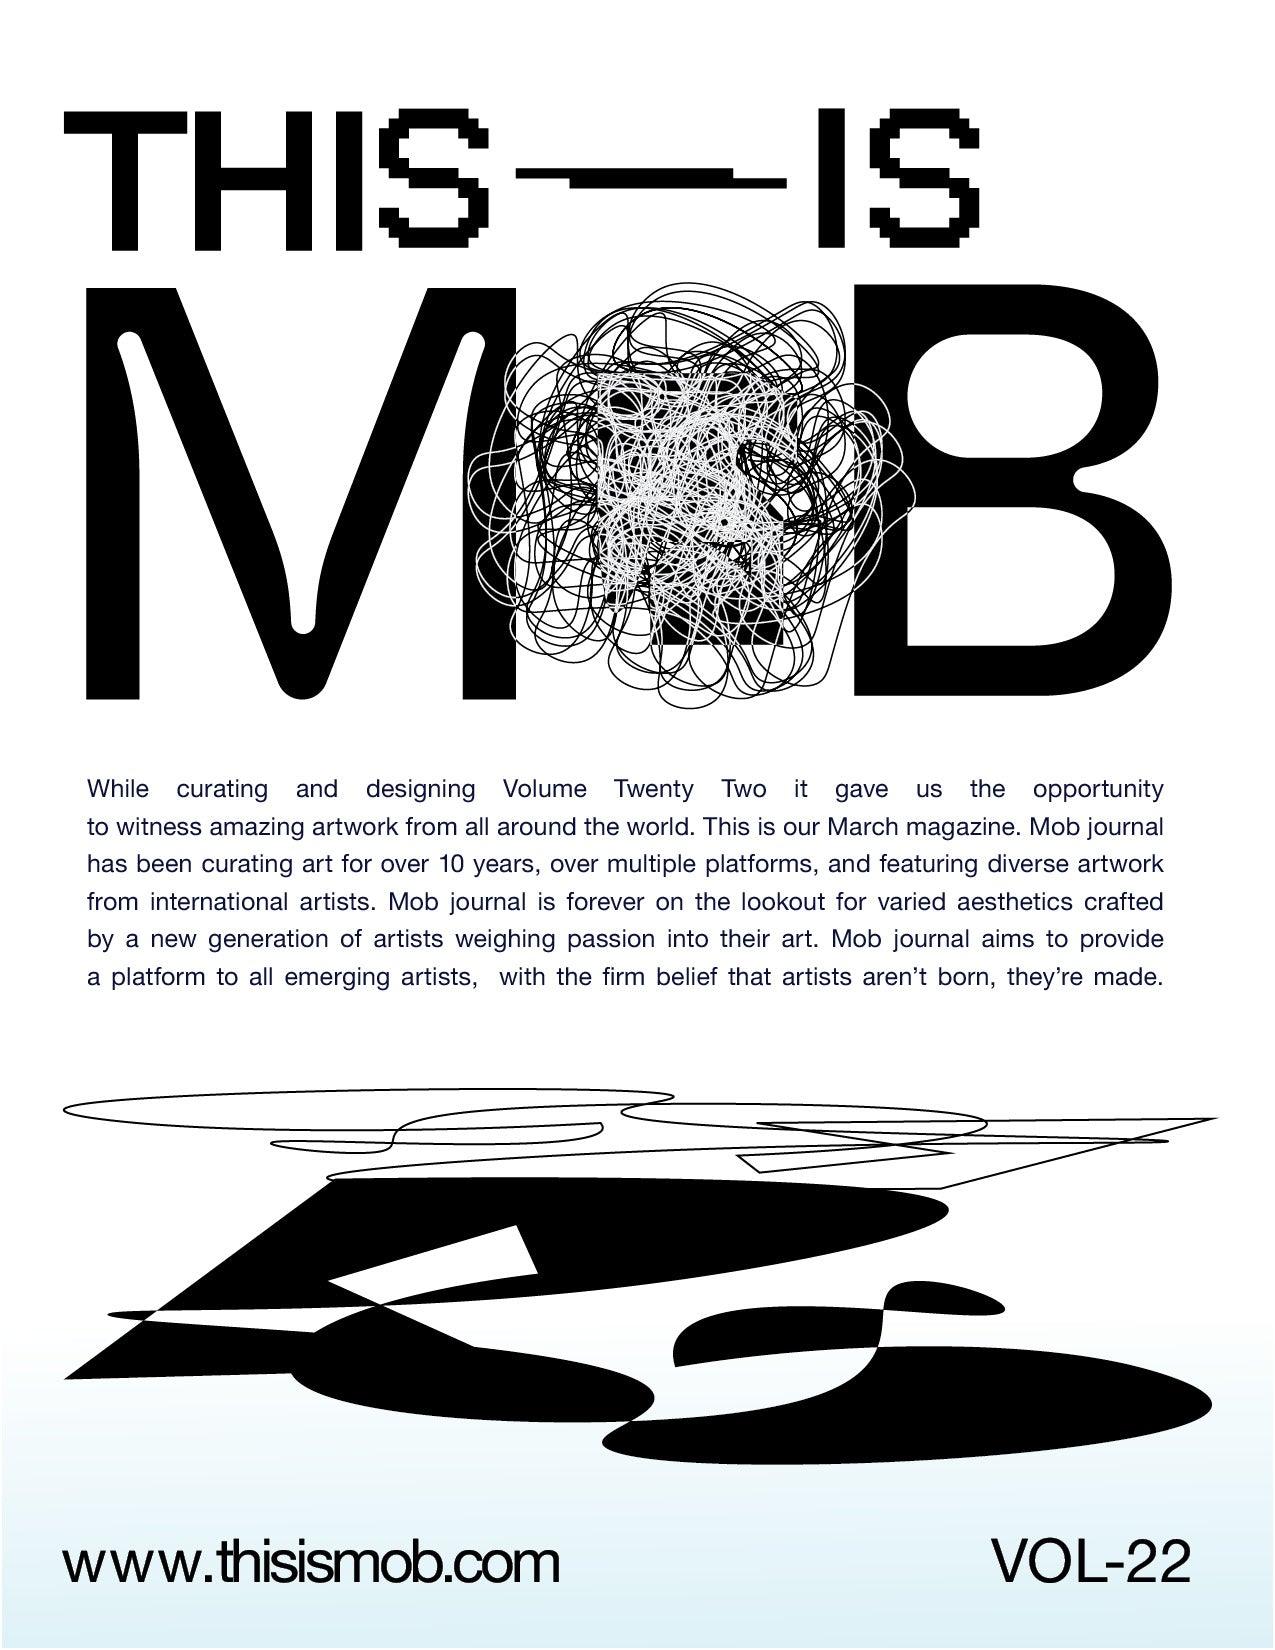 MOB JOURNAL | VOLUME TWENTY TWO | ISSUE #04 - Mob Journal